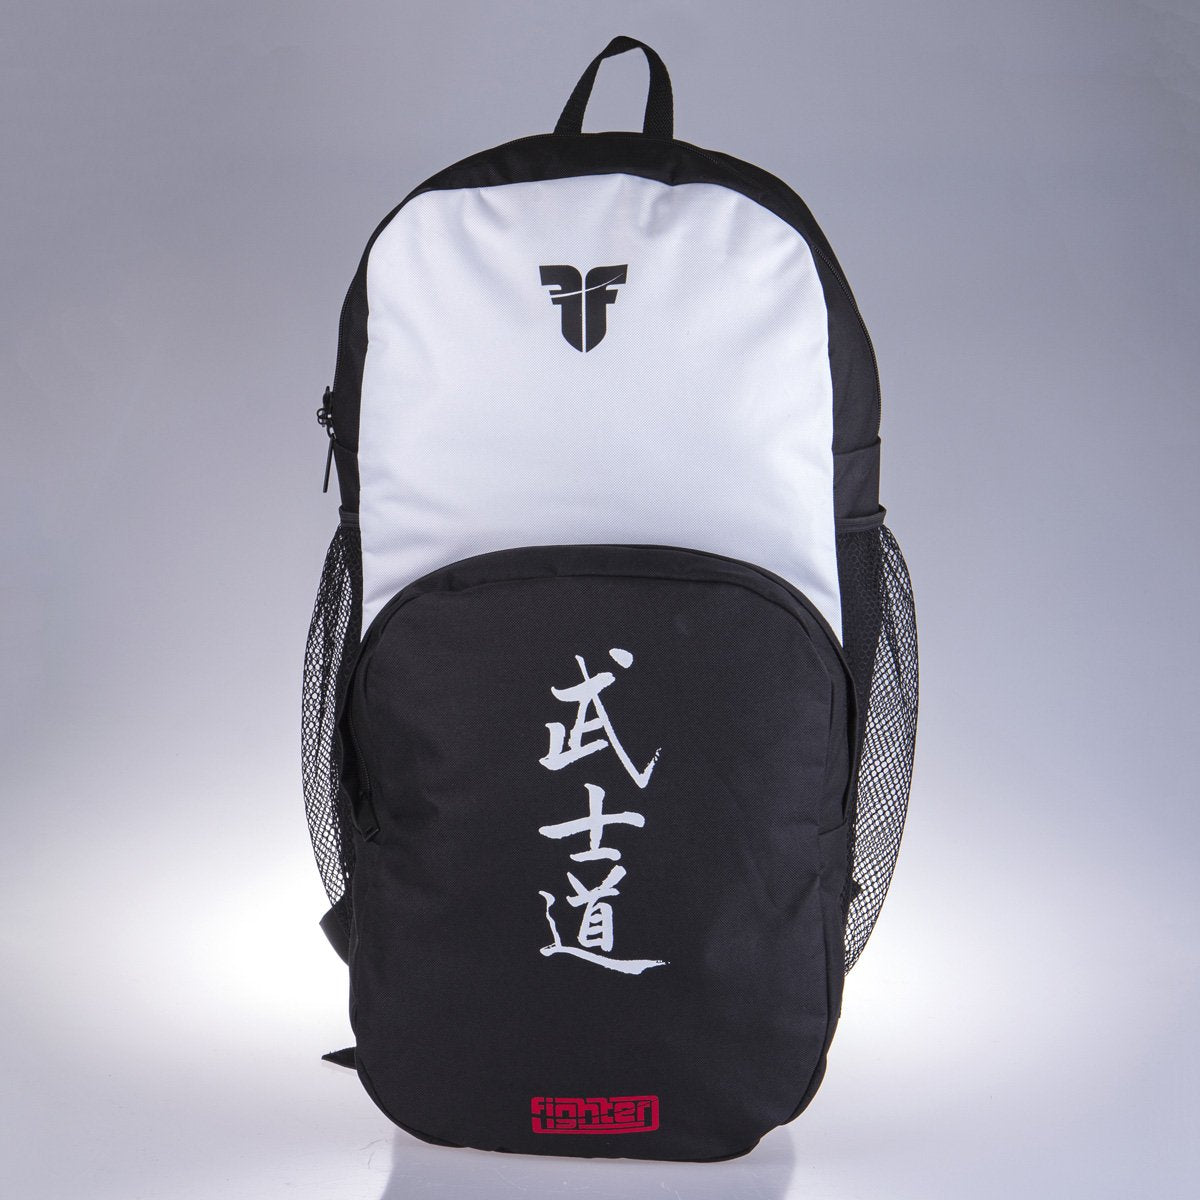 Fighters Large Backpack - Bushido - white